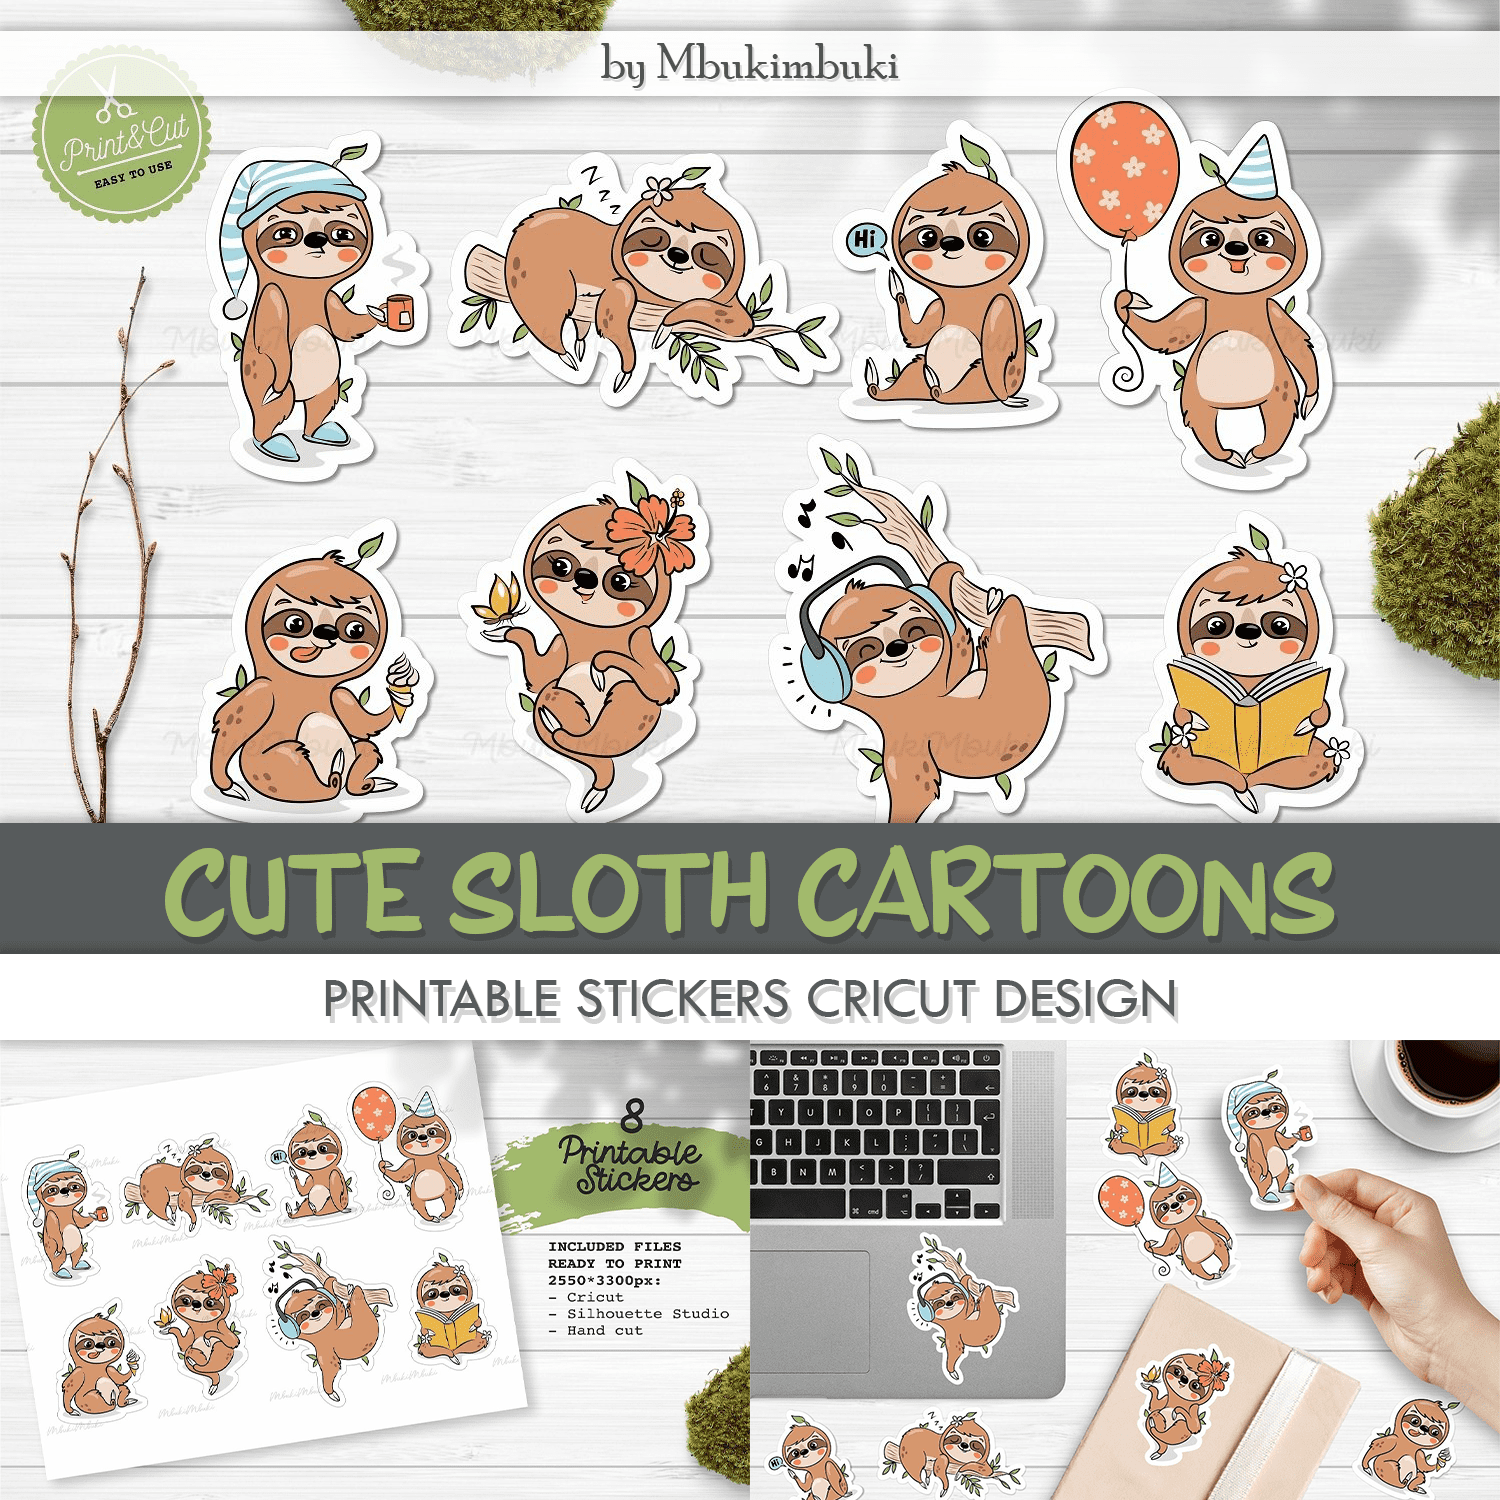 Set of cute sloth cartoon stickers.